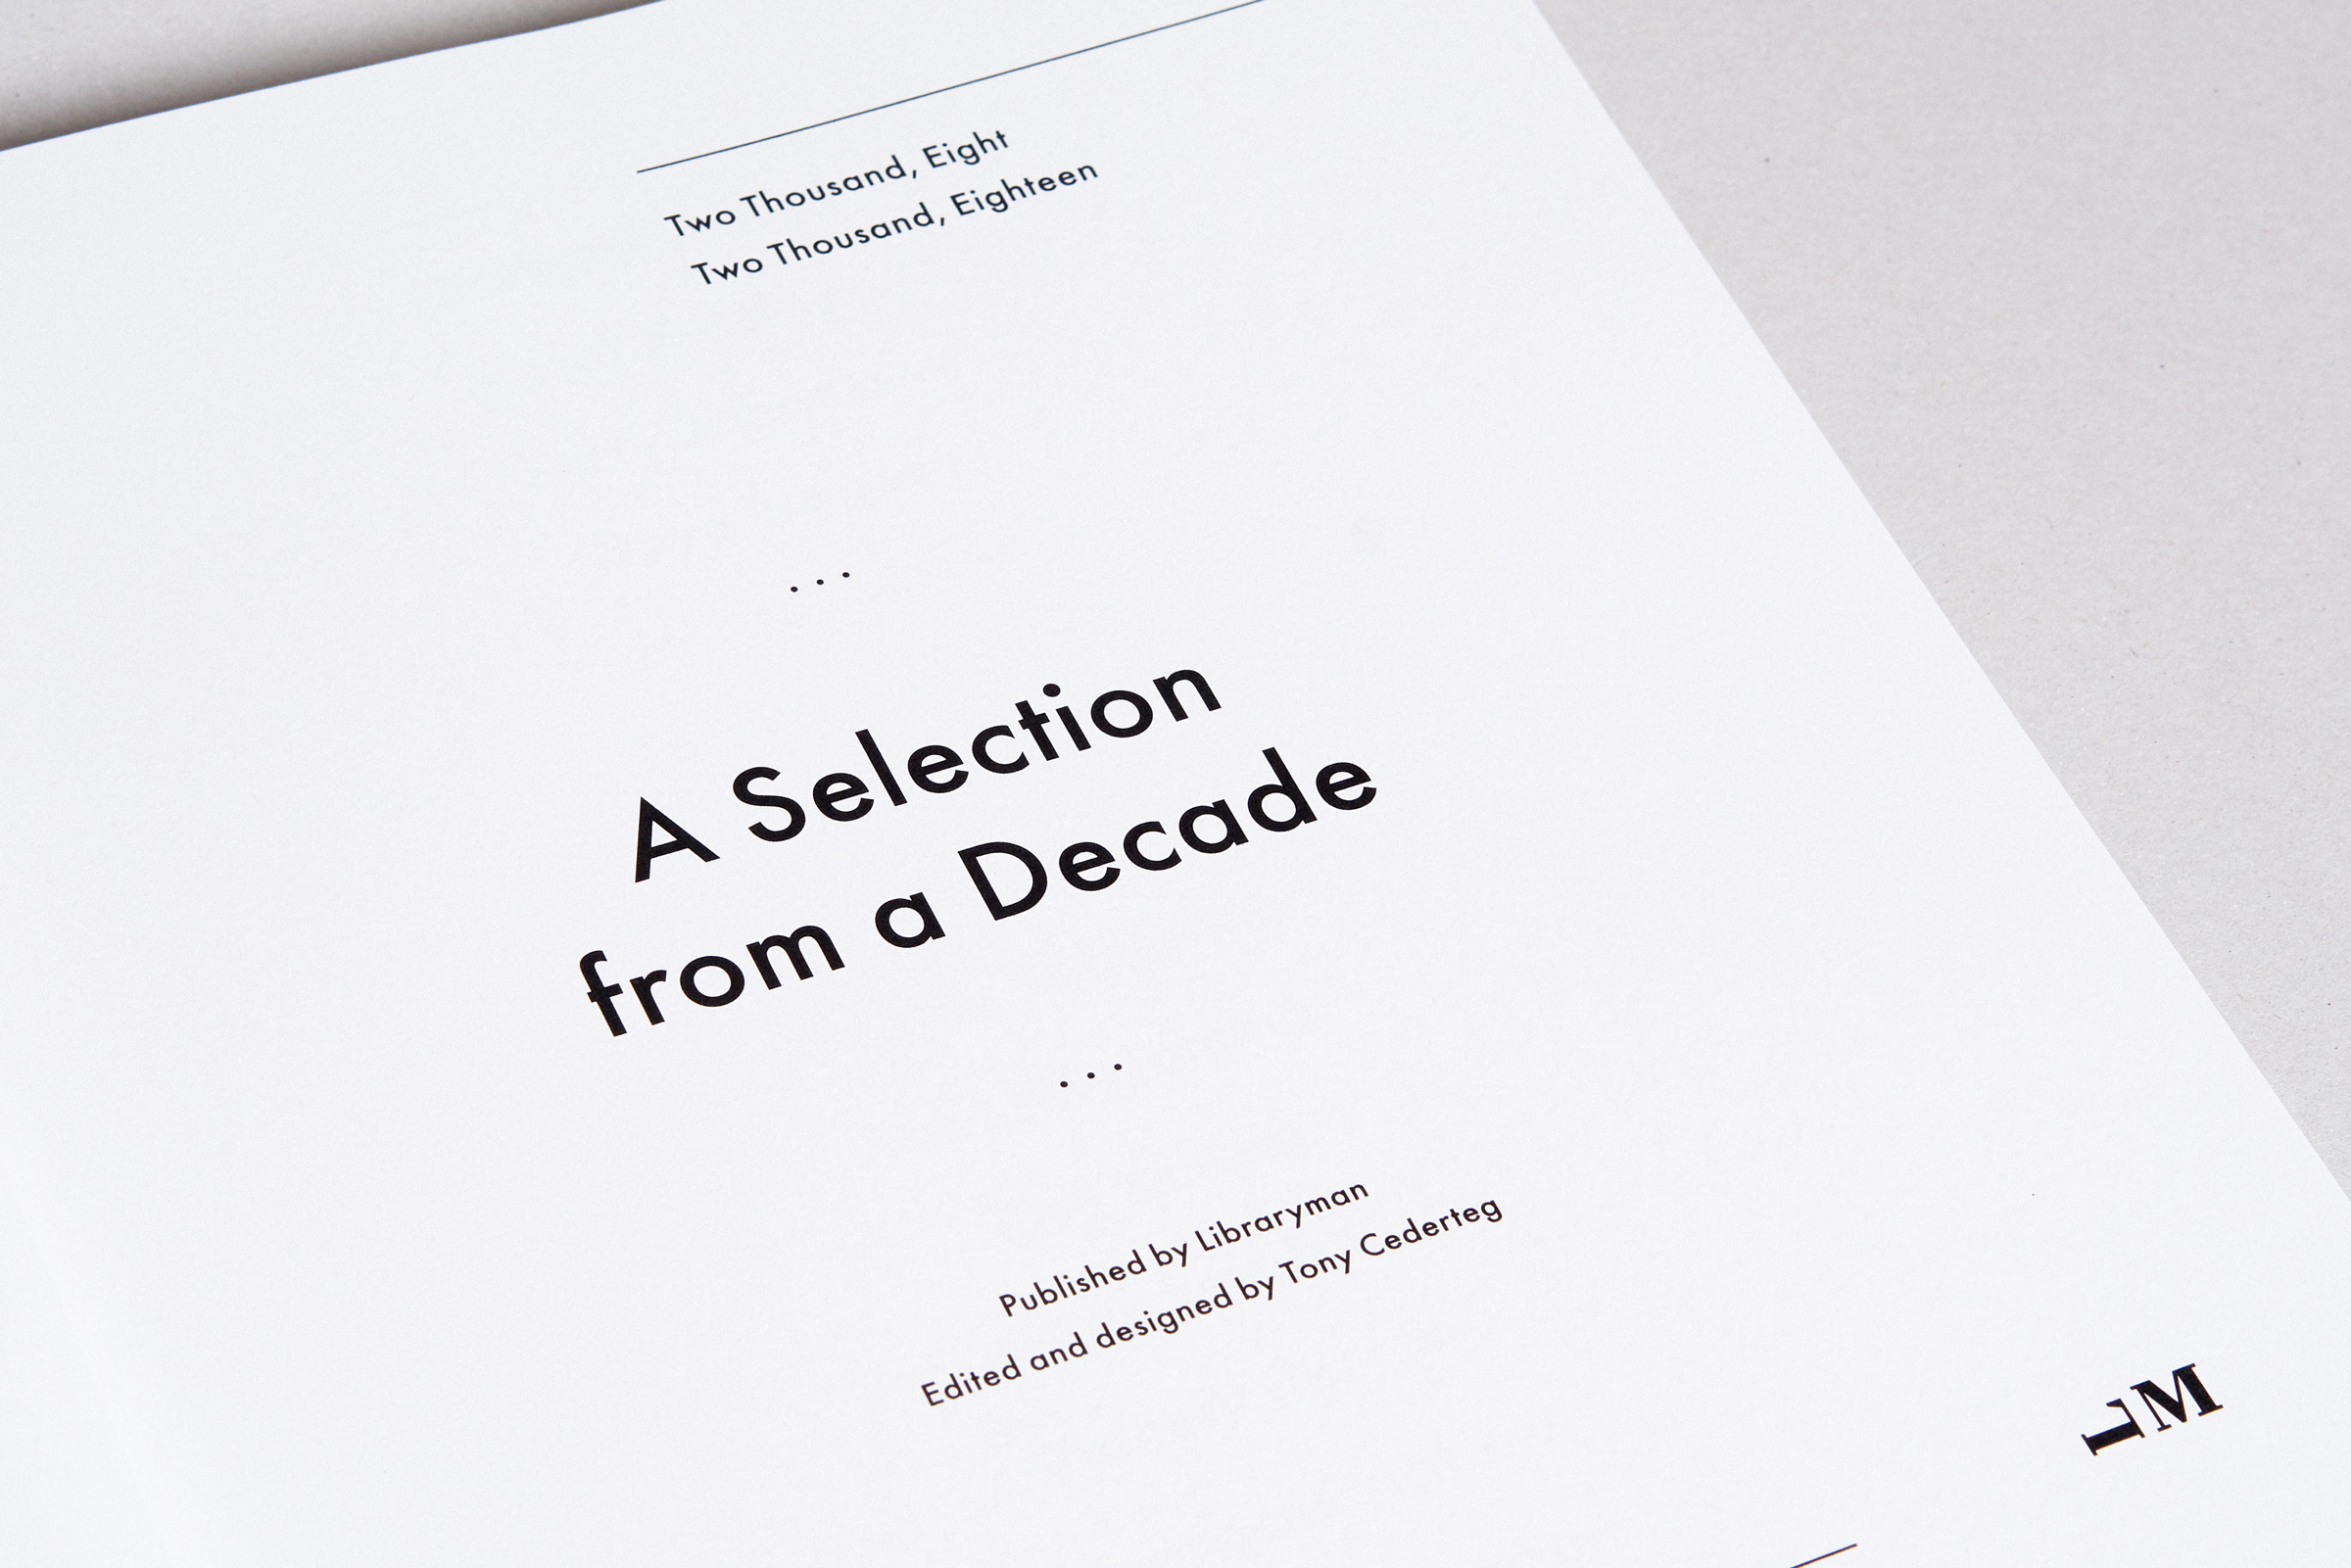 Libraryman — A Selection from a Decade — Book